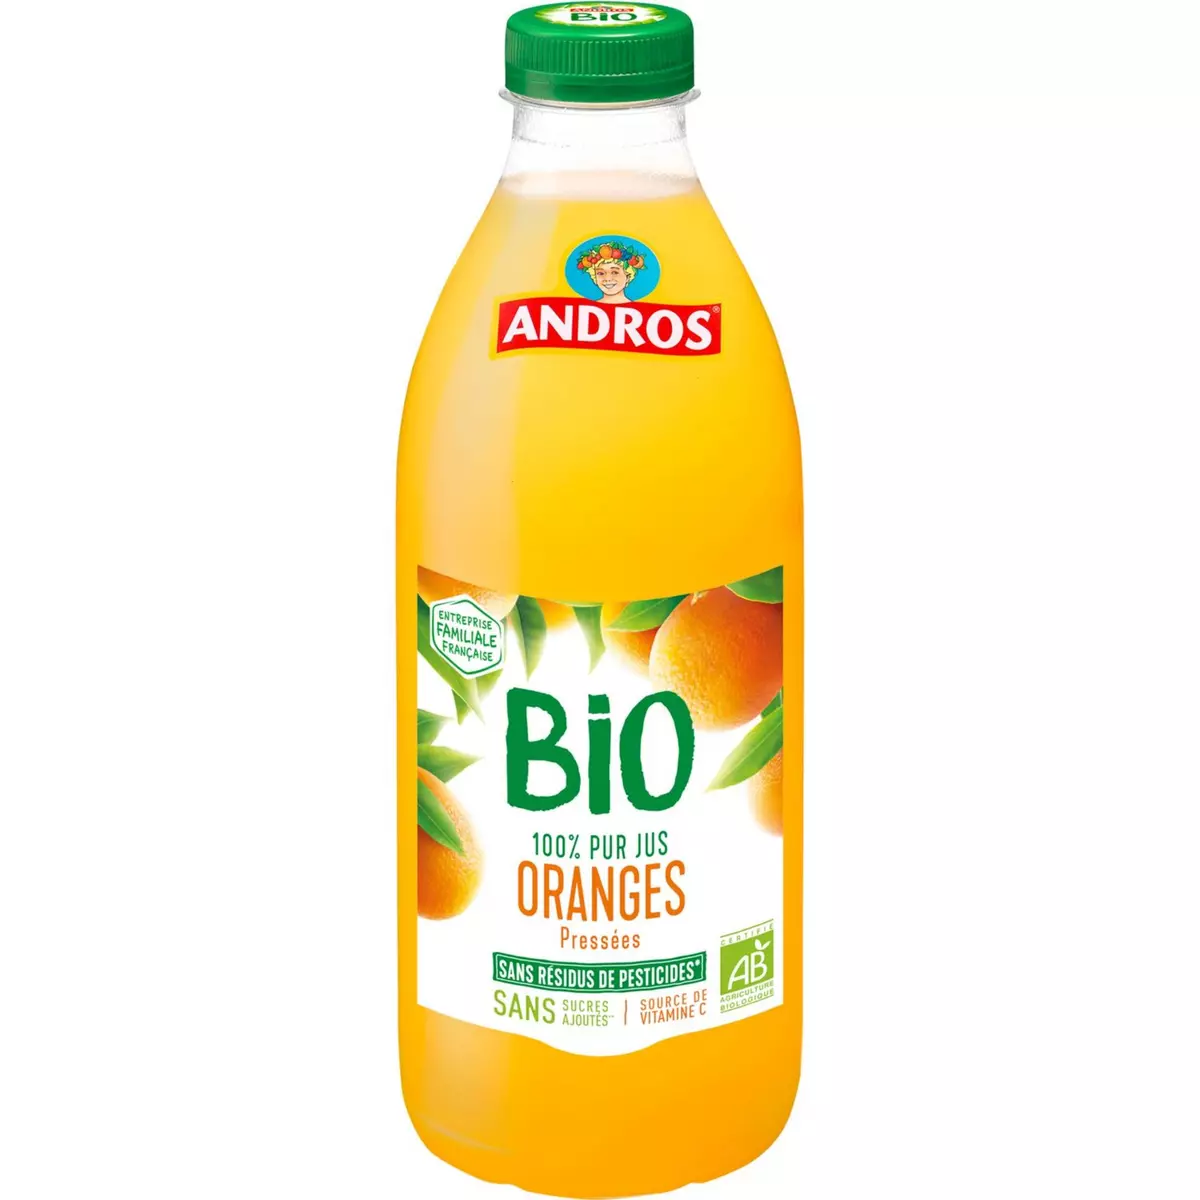 ANDROS Pur jus d'oranges pressés bio 75cl